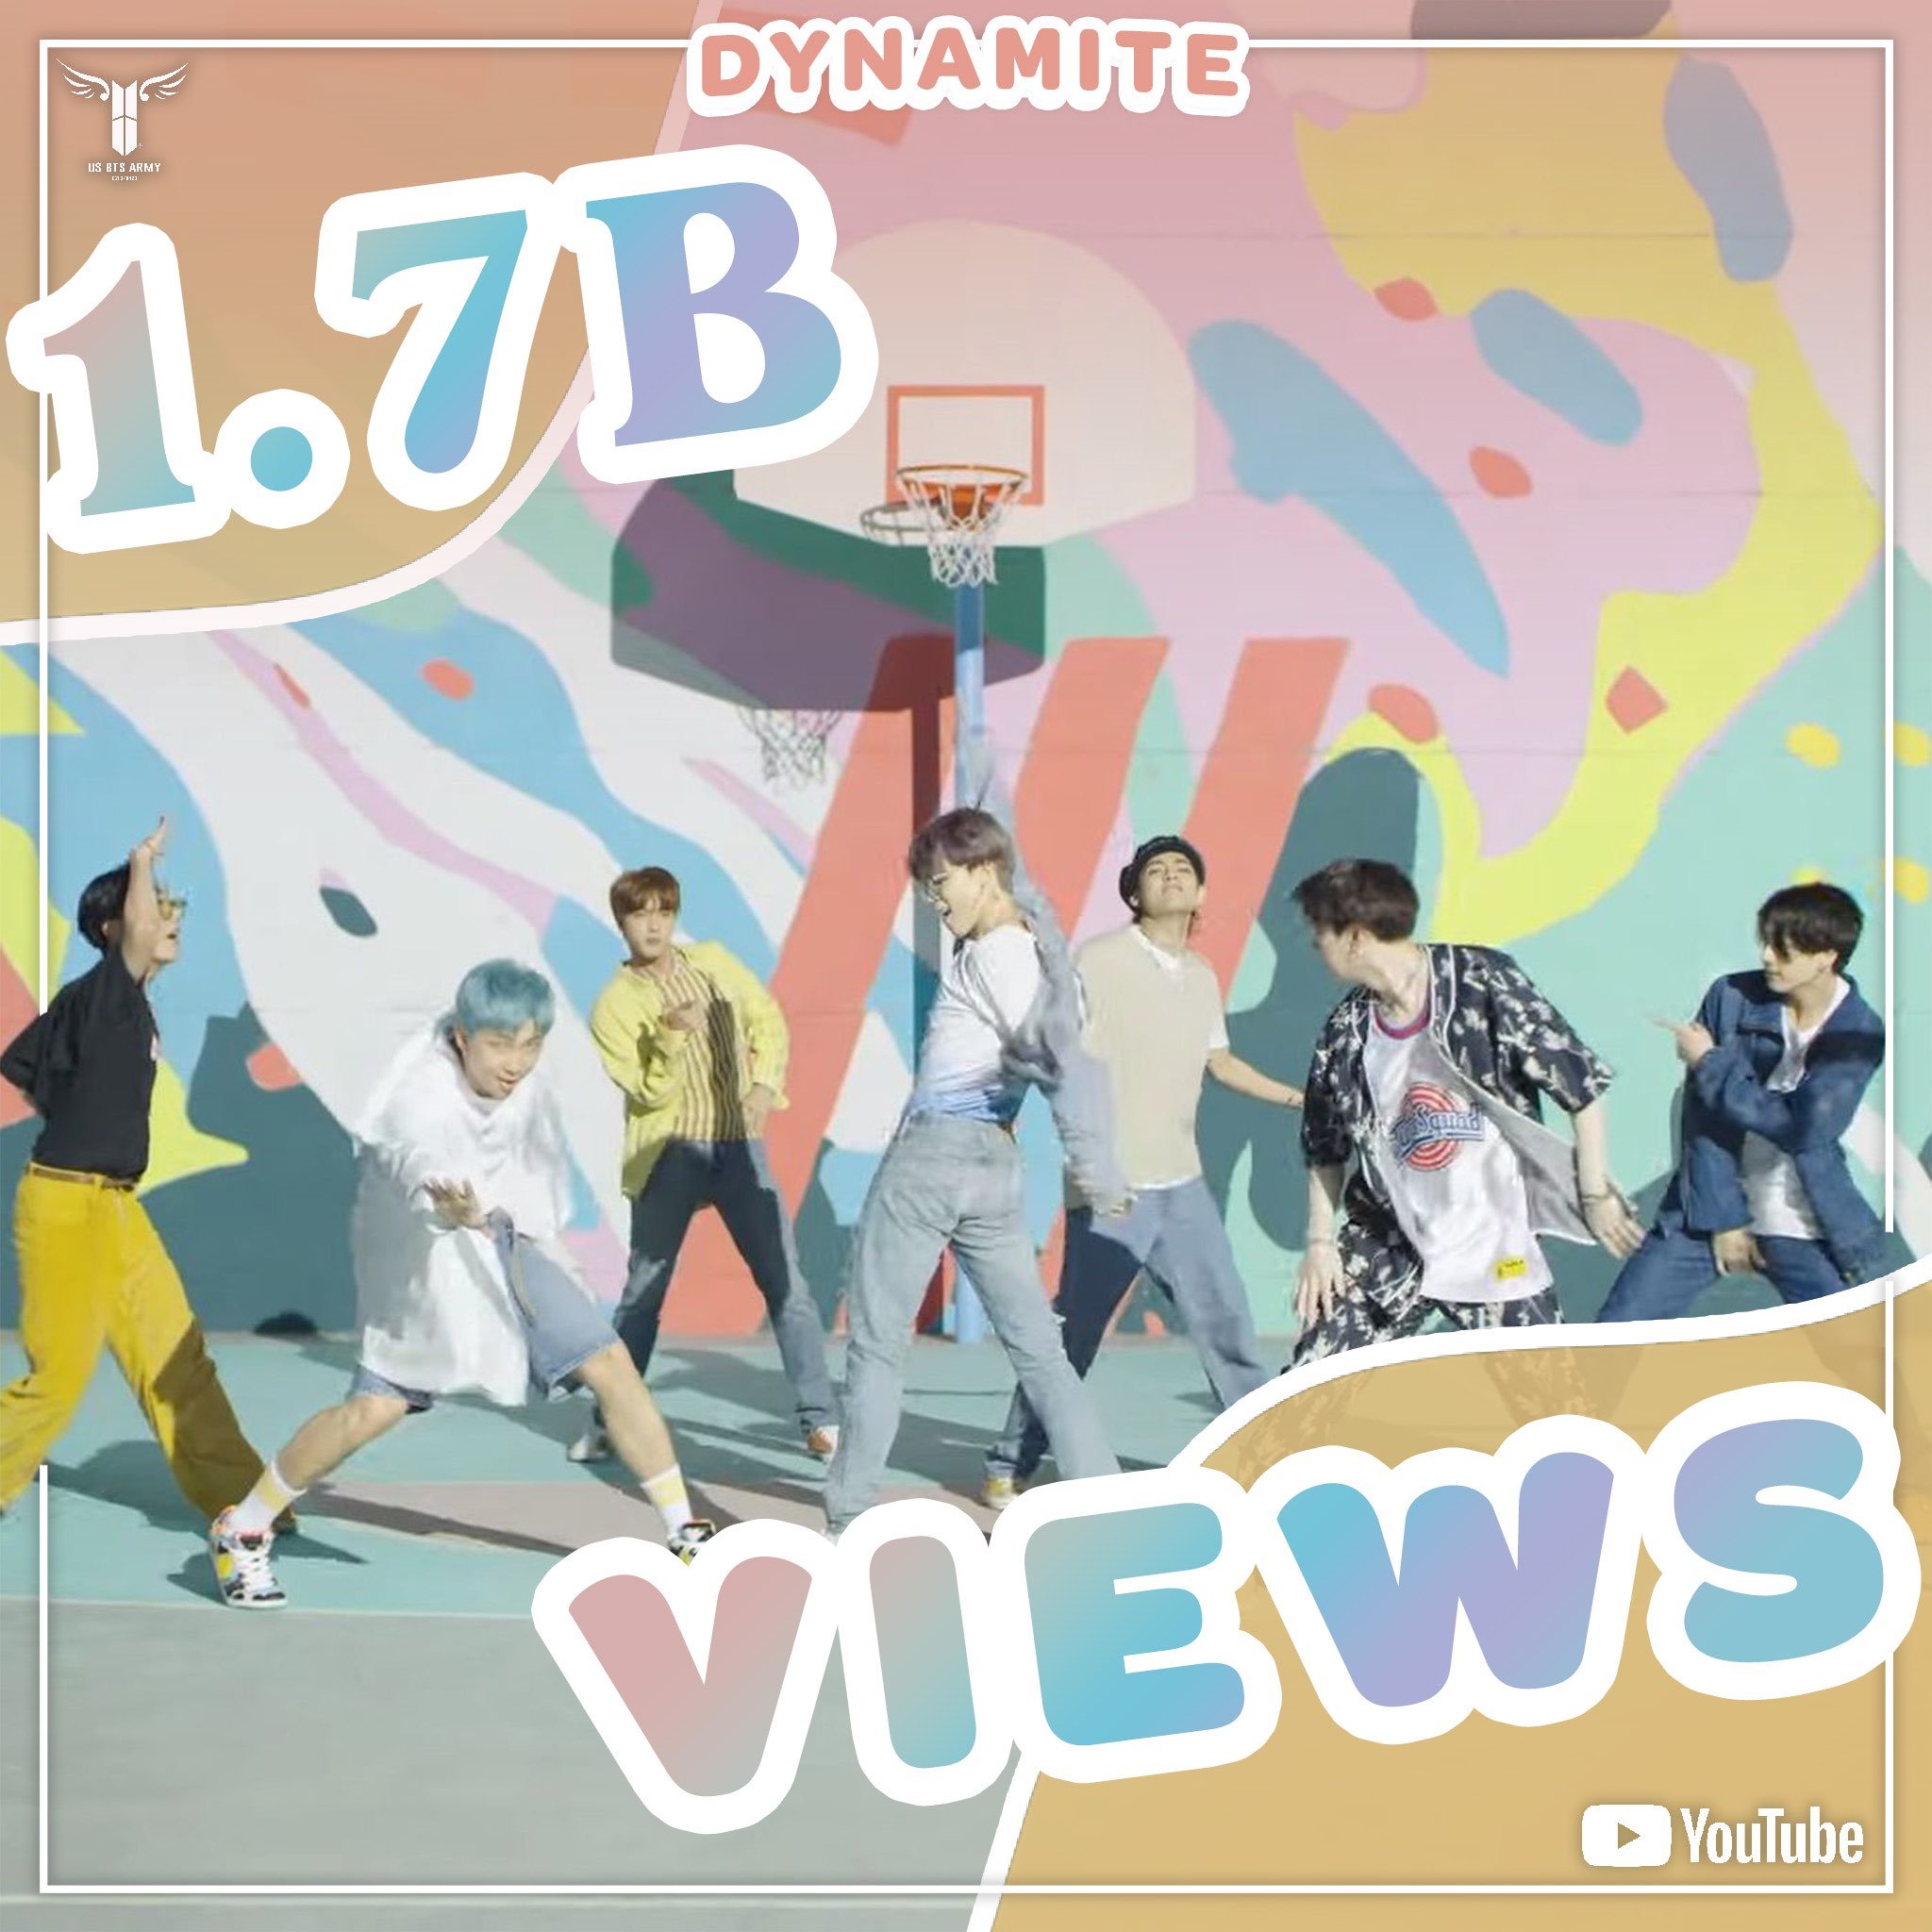 BTS (방탄소년단) 'Dynamite' Official MV 